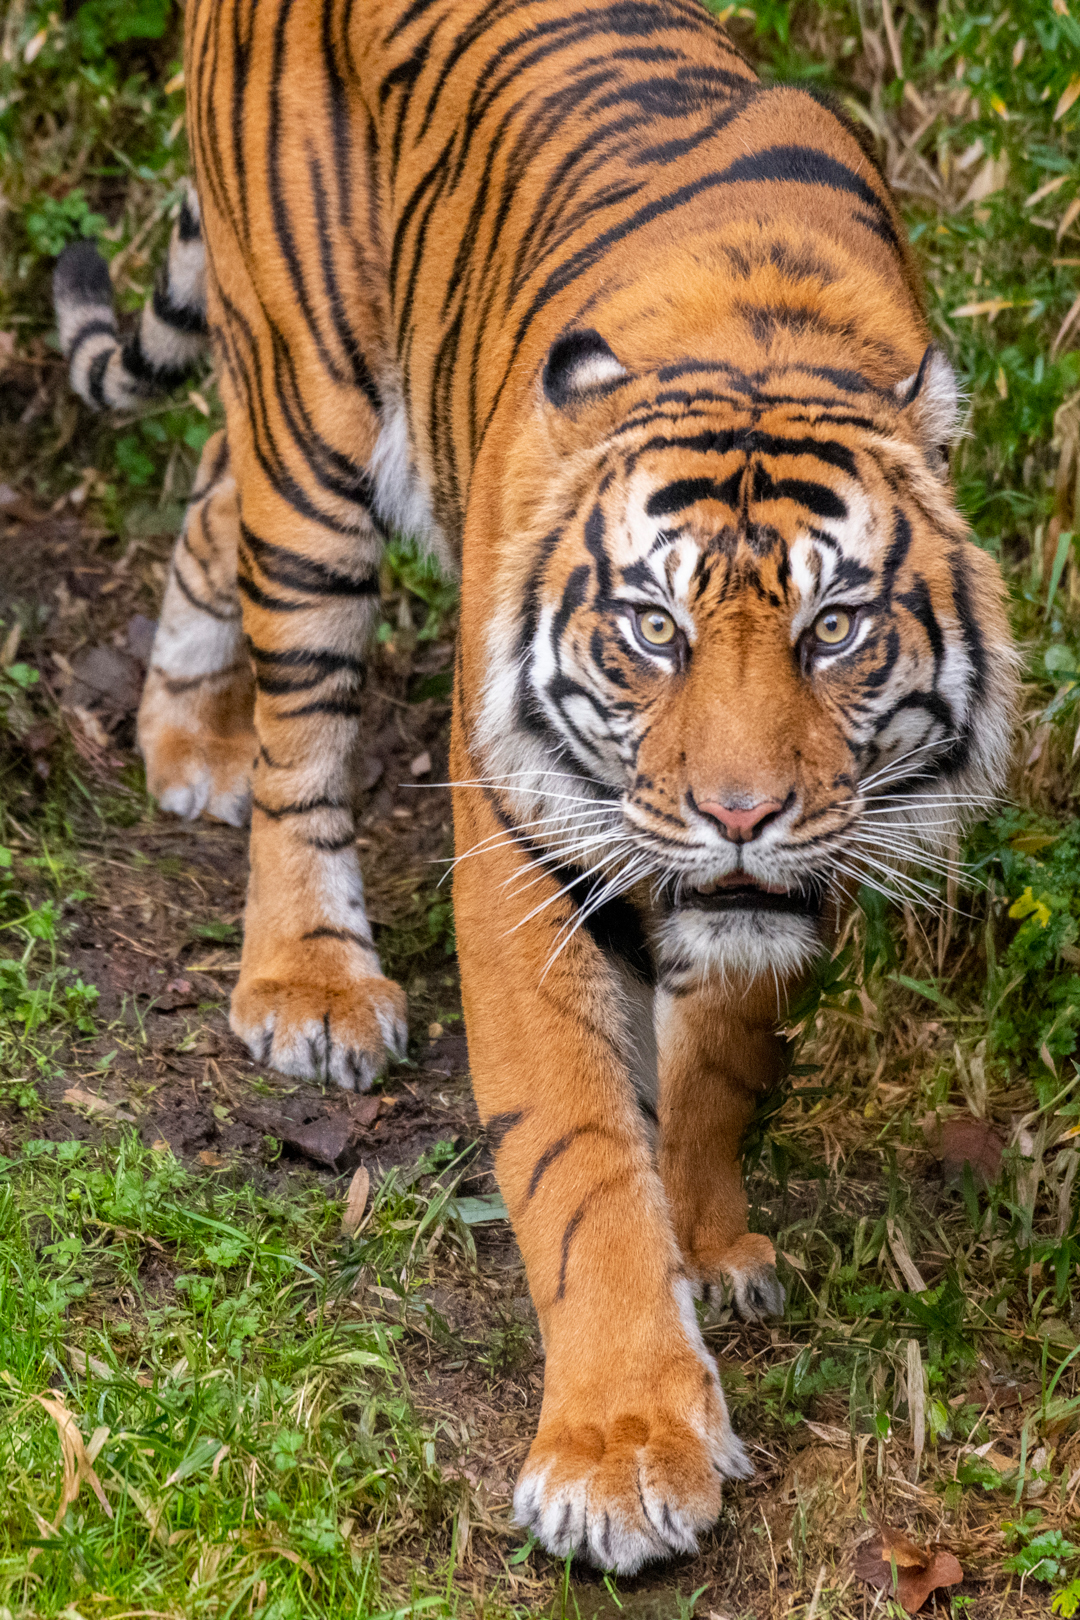 sumatran tiger vs bengal tiger